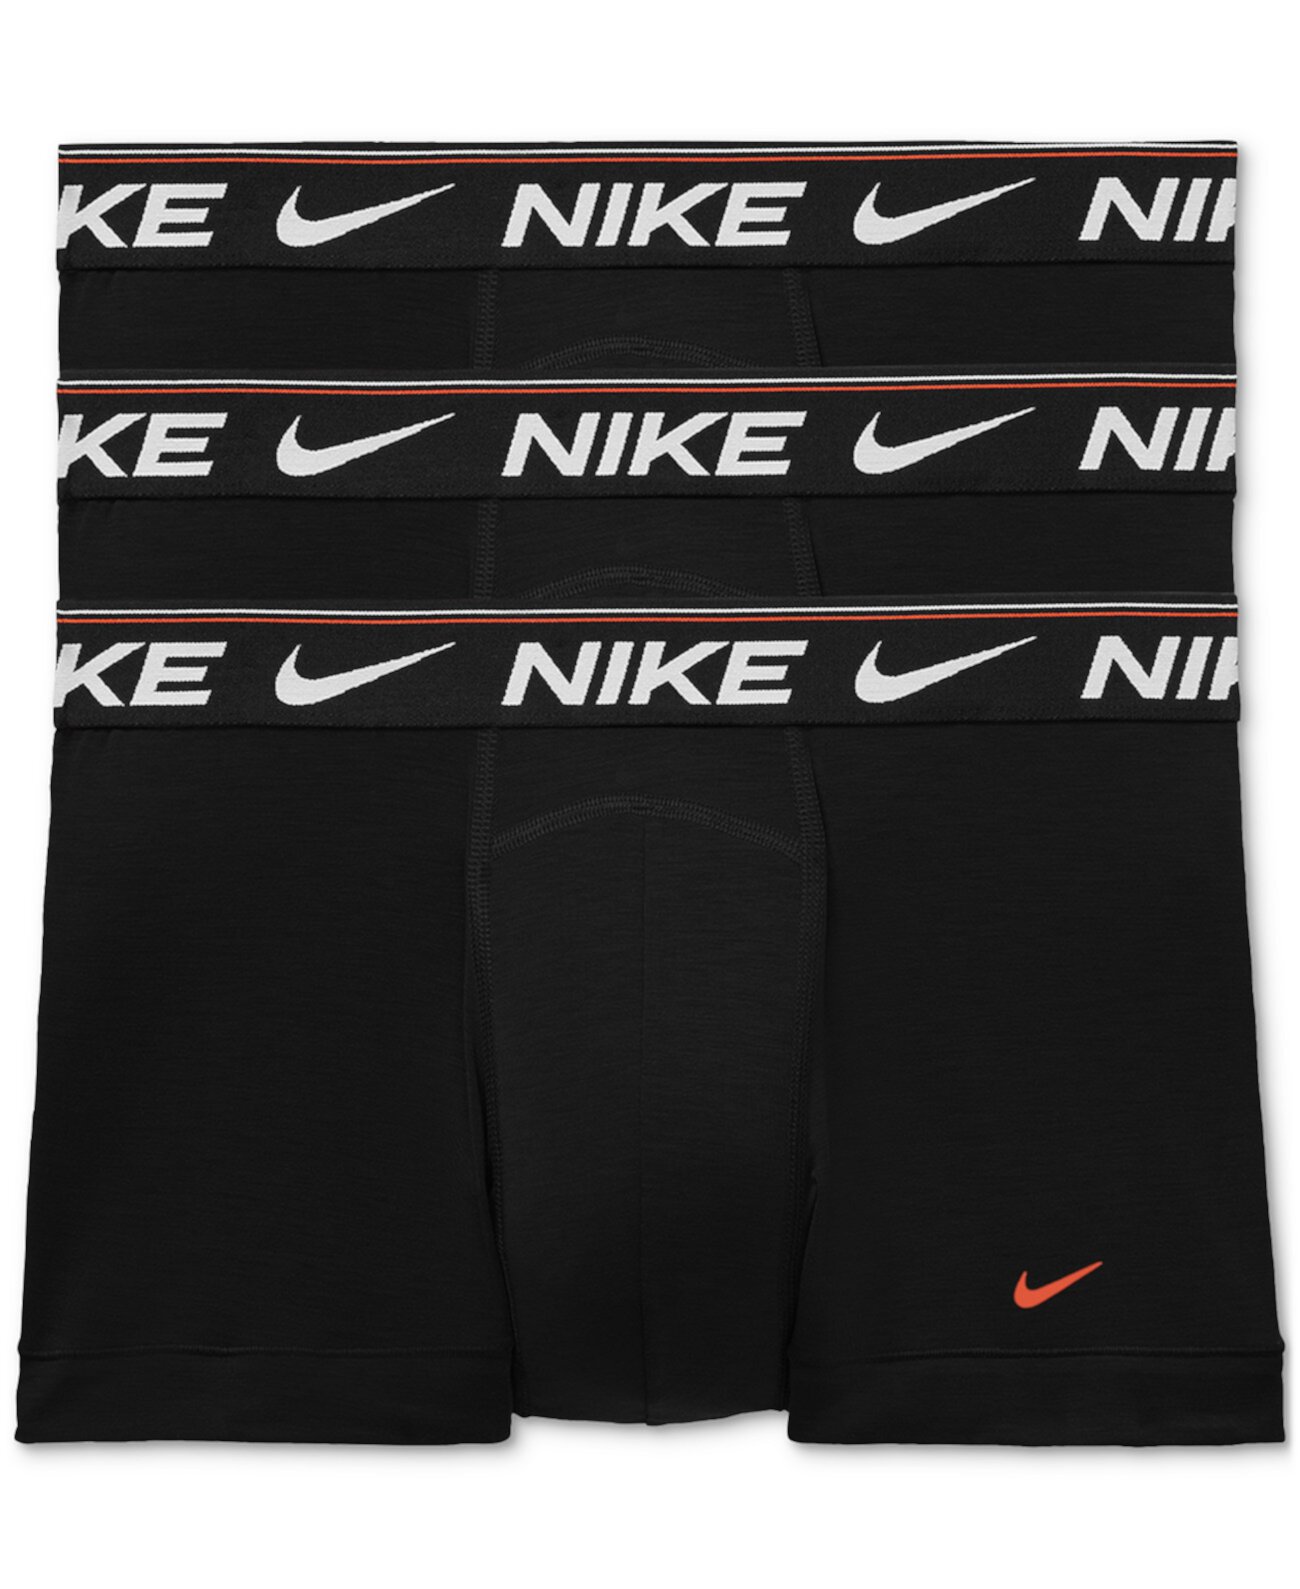 Мужские Трусы Nike из Комплекта 3 шт. с Технологией Dri-FIT Nike